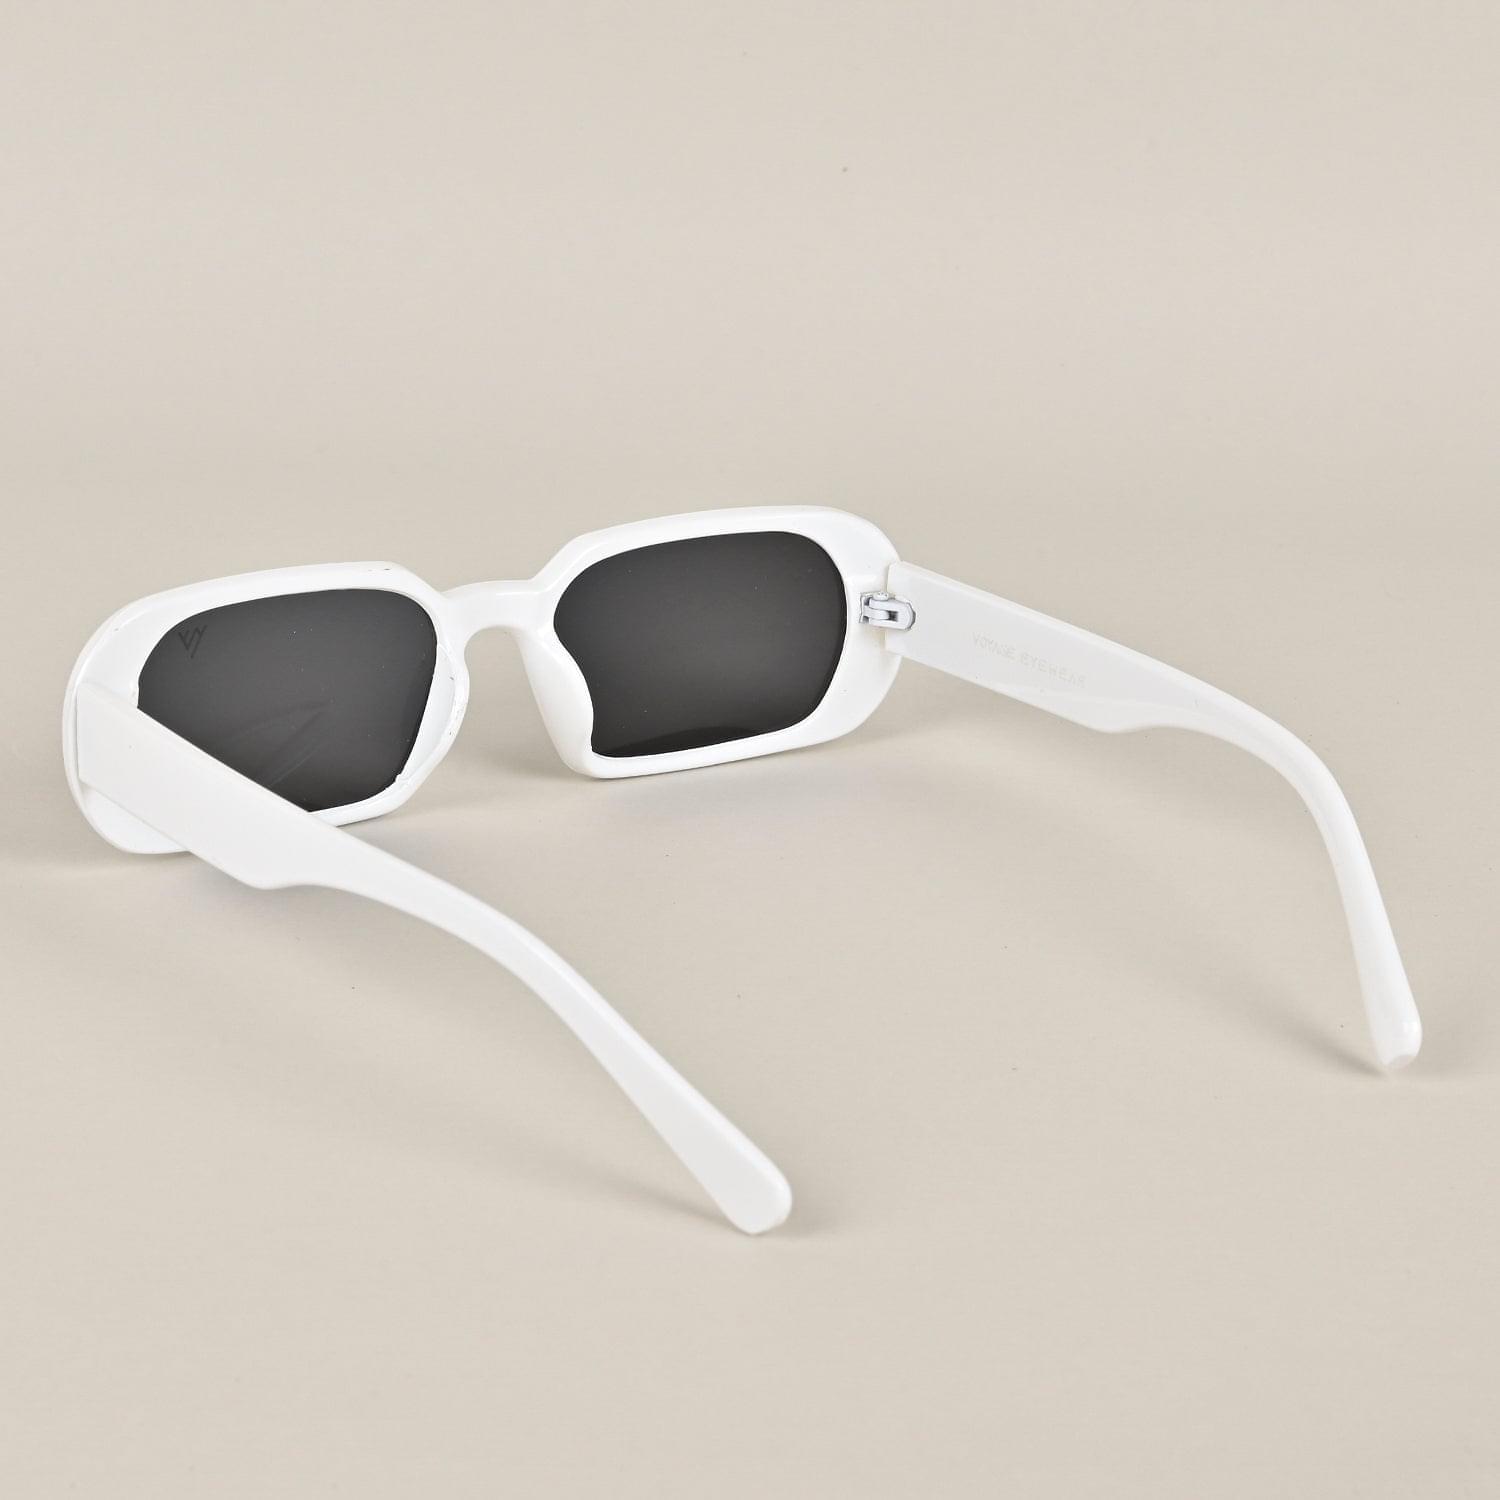 Voyage Retro Oval White Sunglasses - MG3599